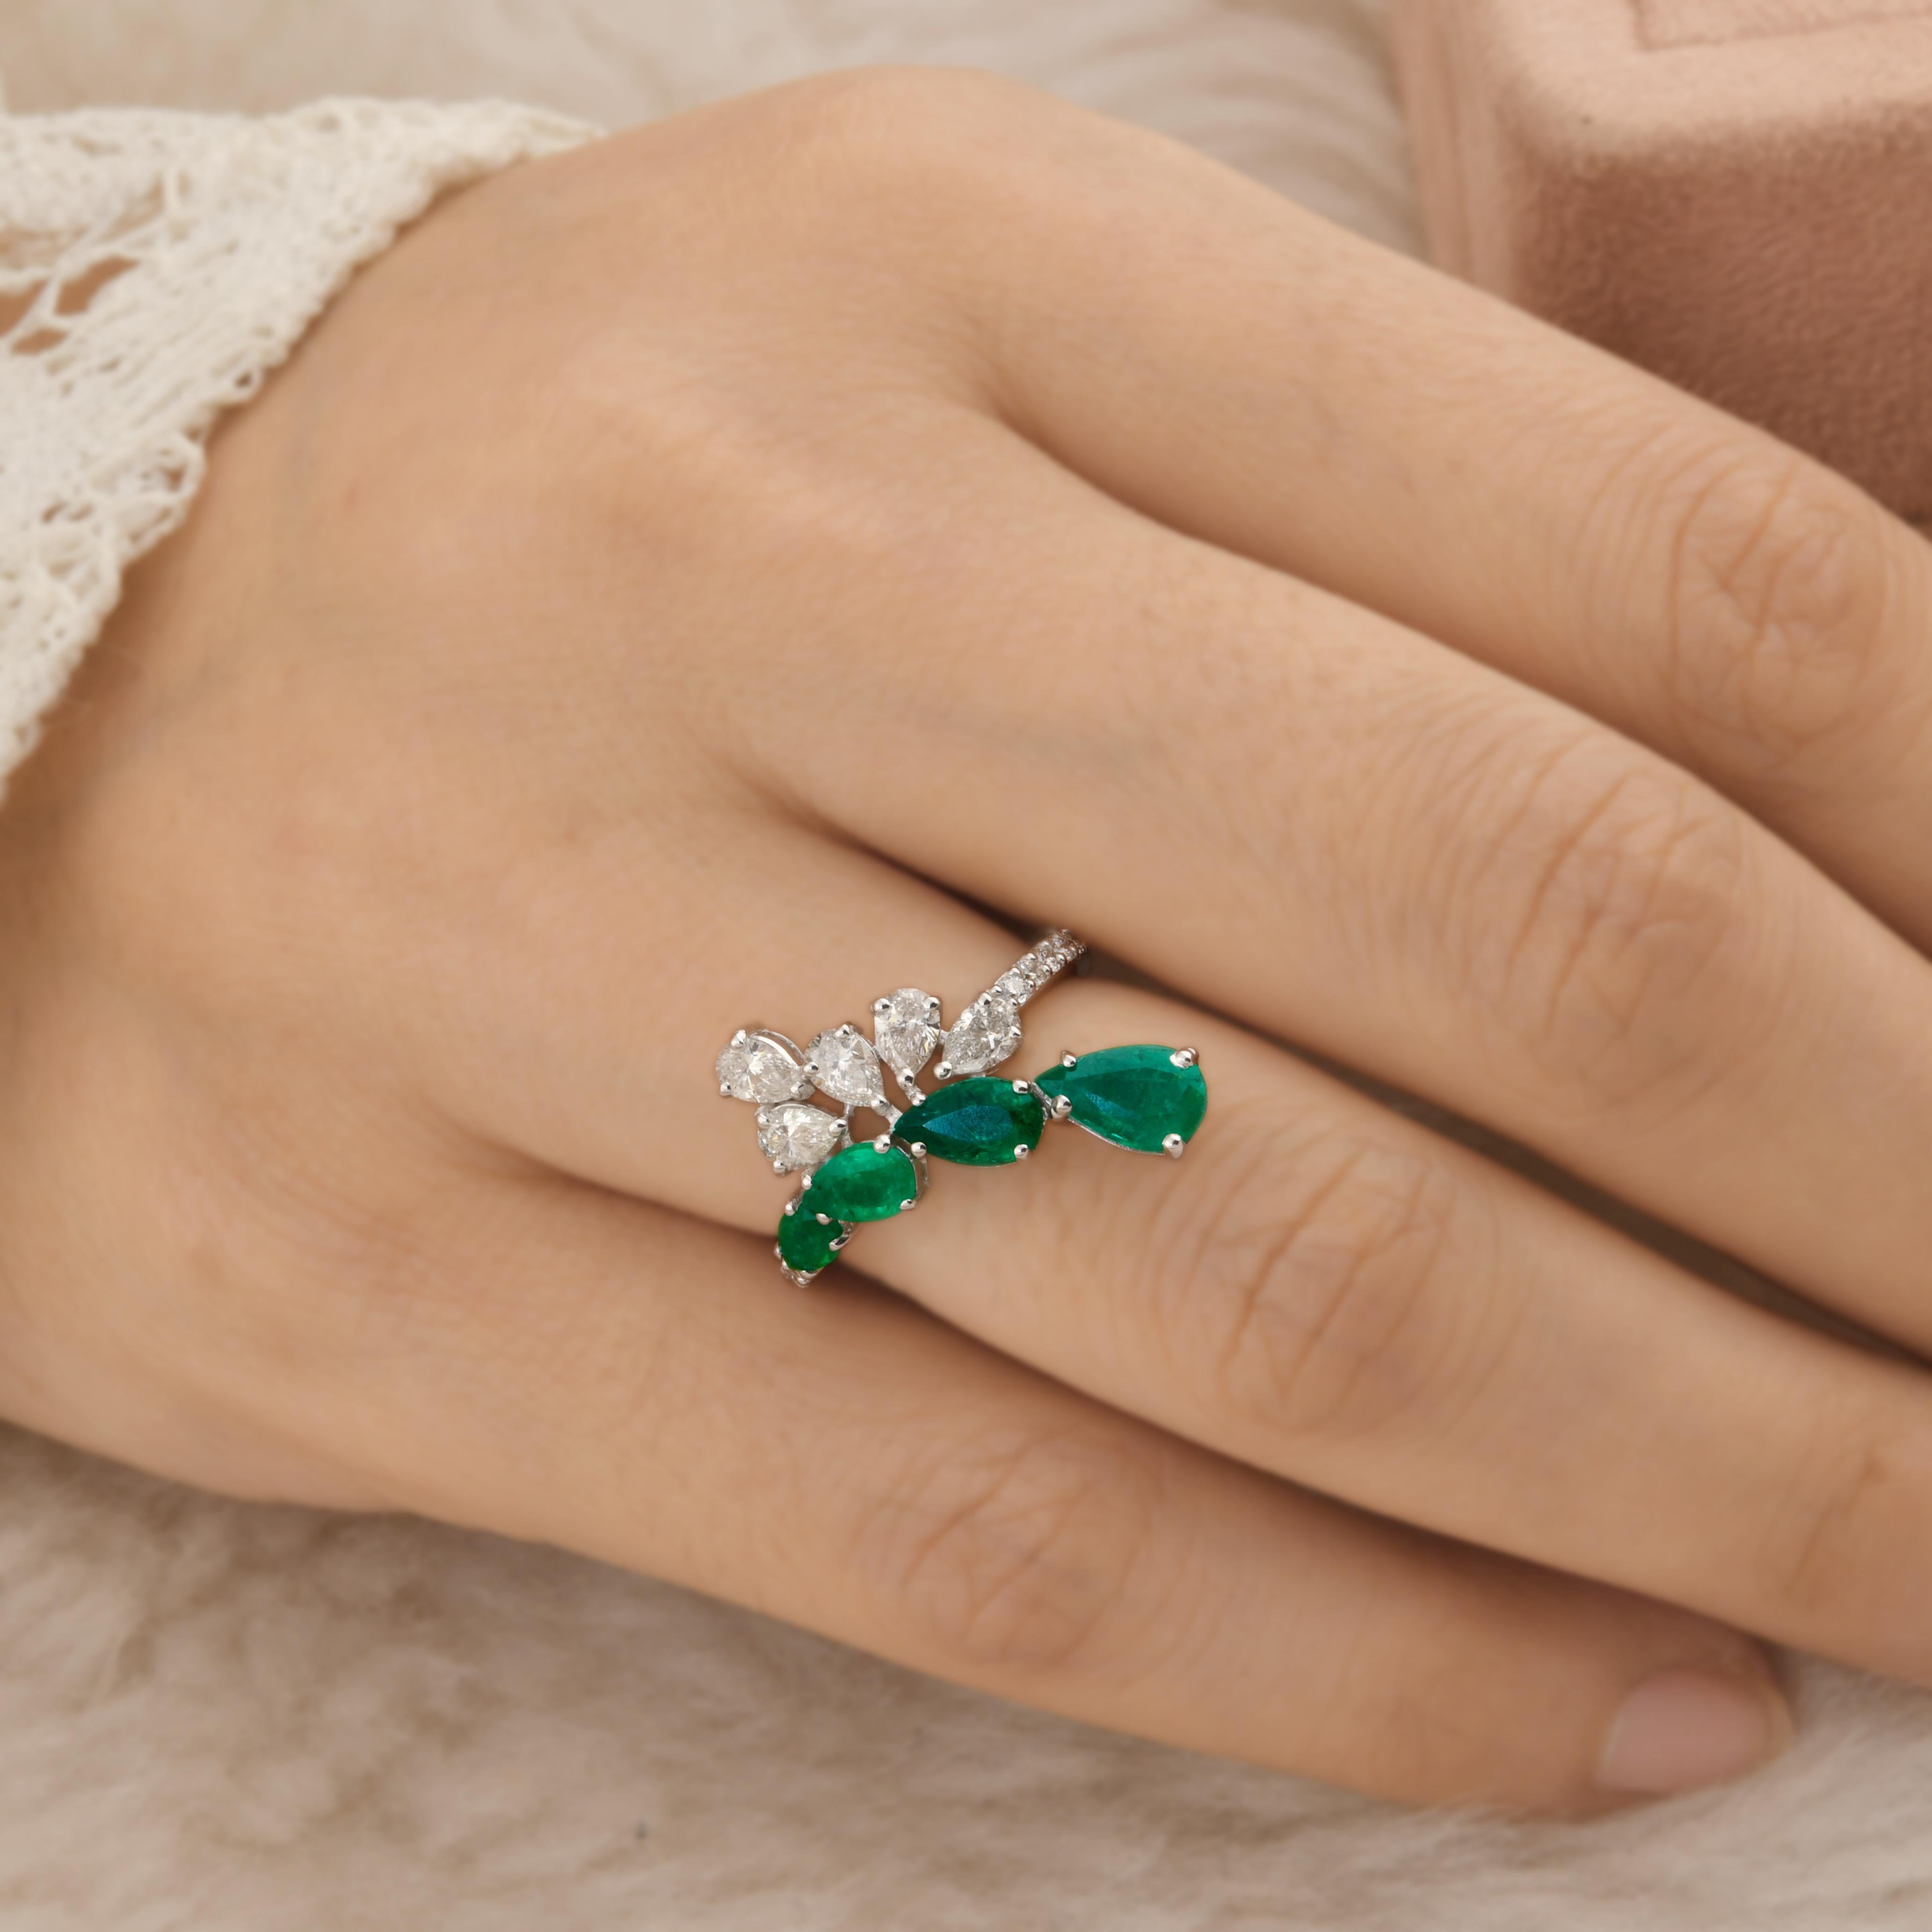 For Sale:  Pear Natural Emerald Gemstone Designer Ring Diamond 18k White Gold Fine Jewelry 5